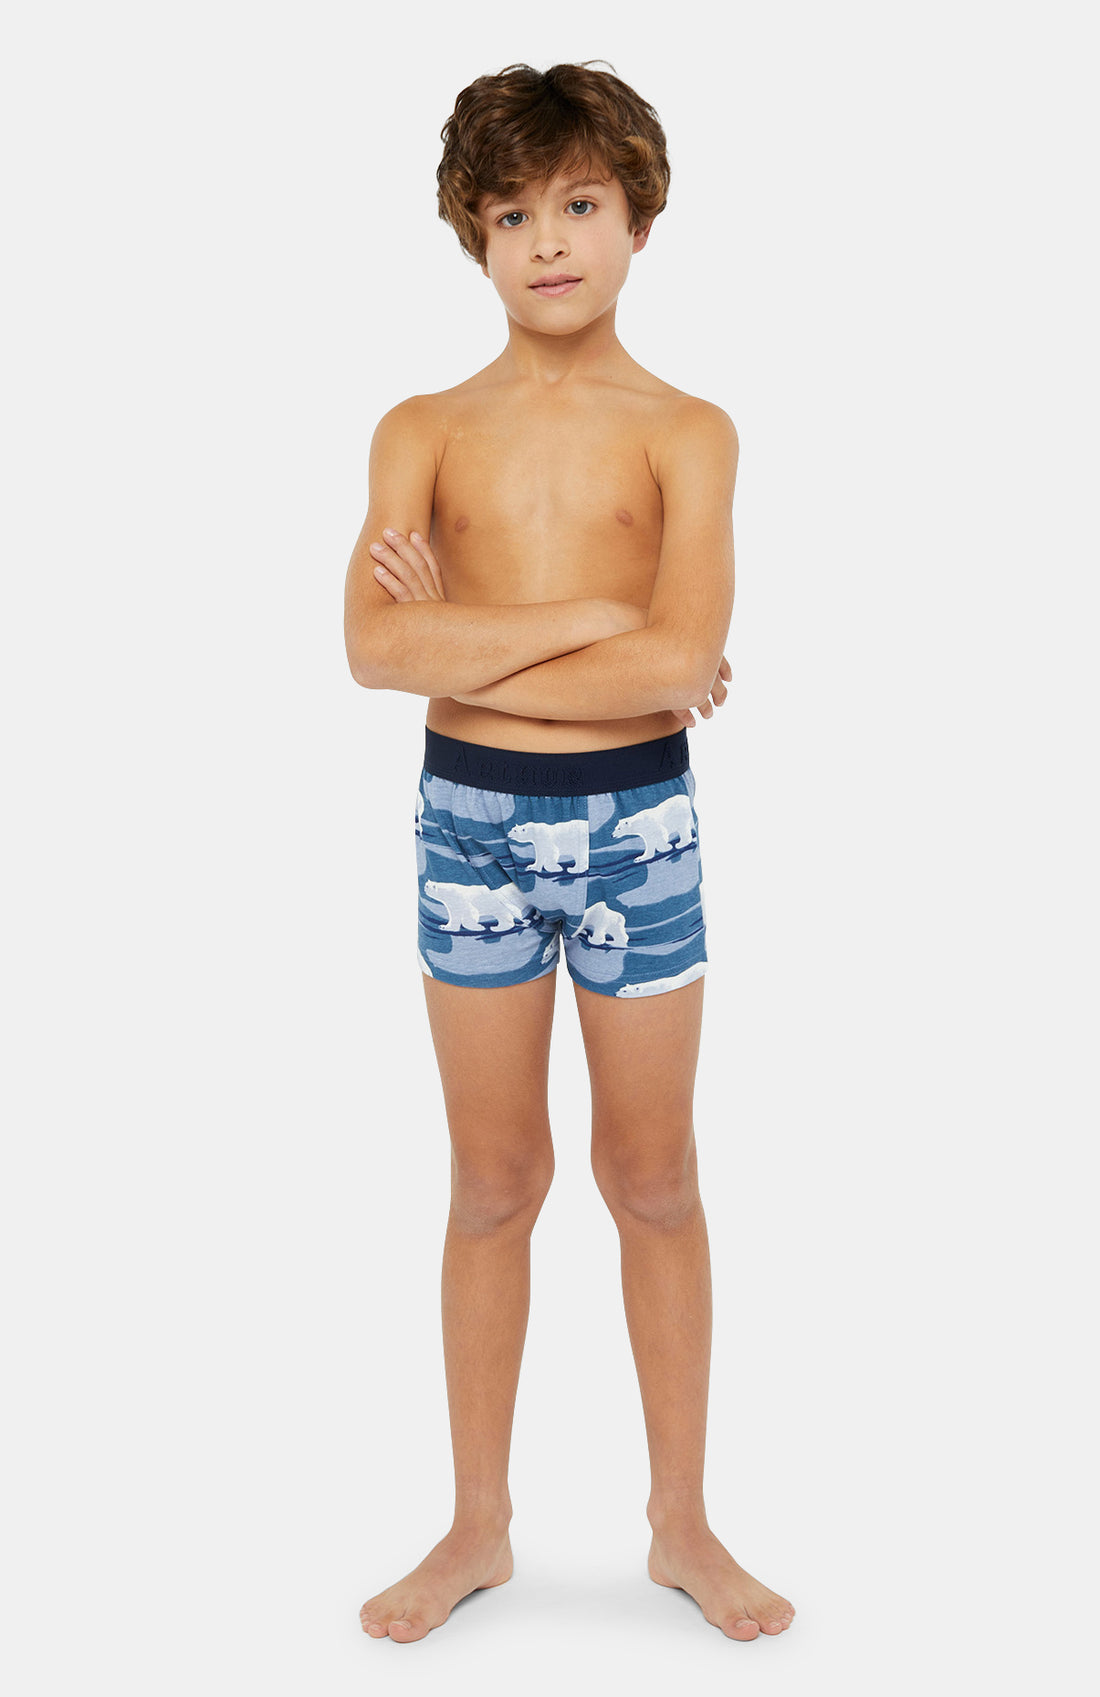 Child Boxer shorts - Polar Bear